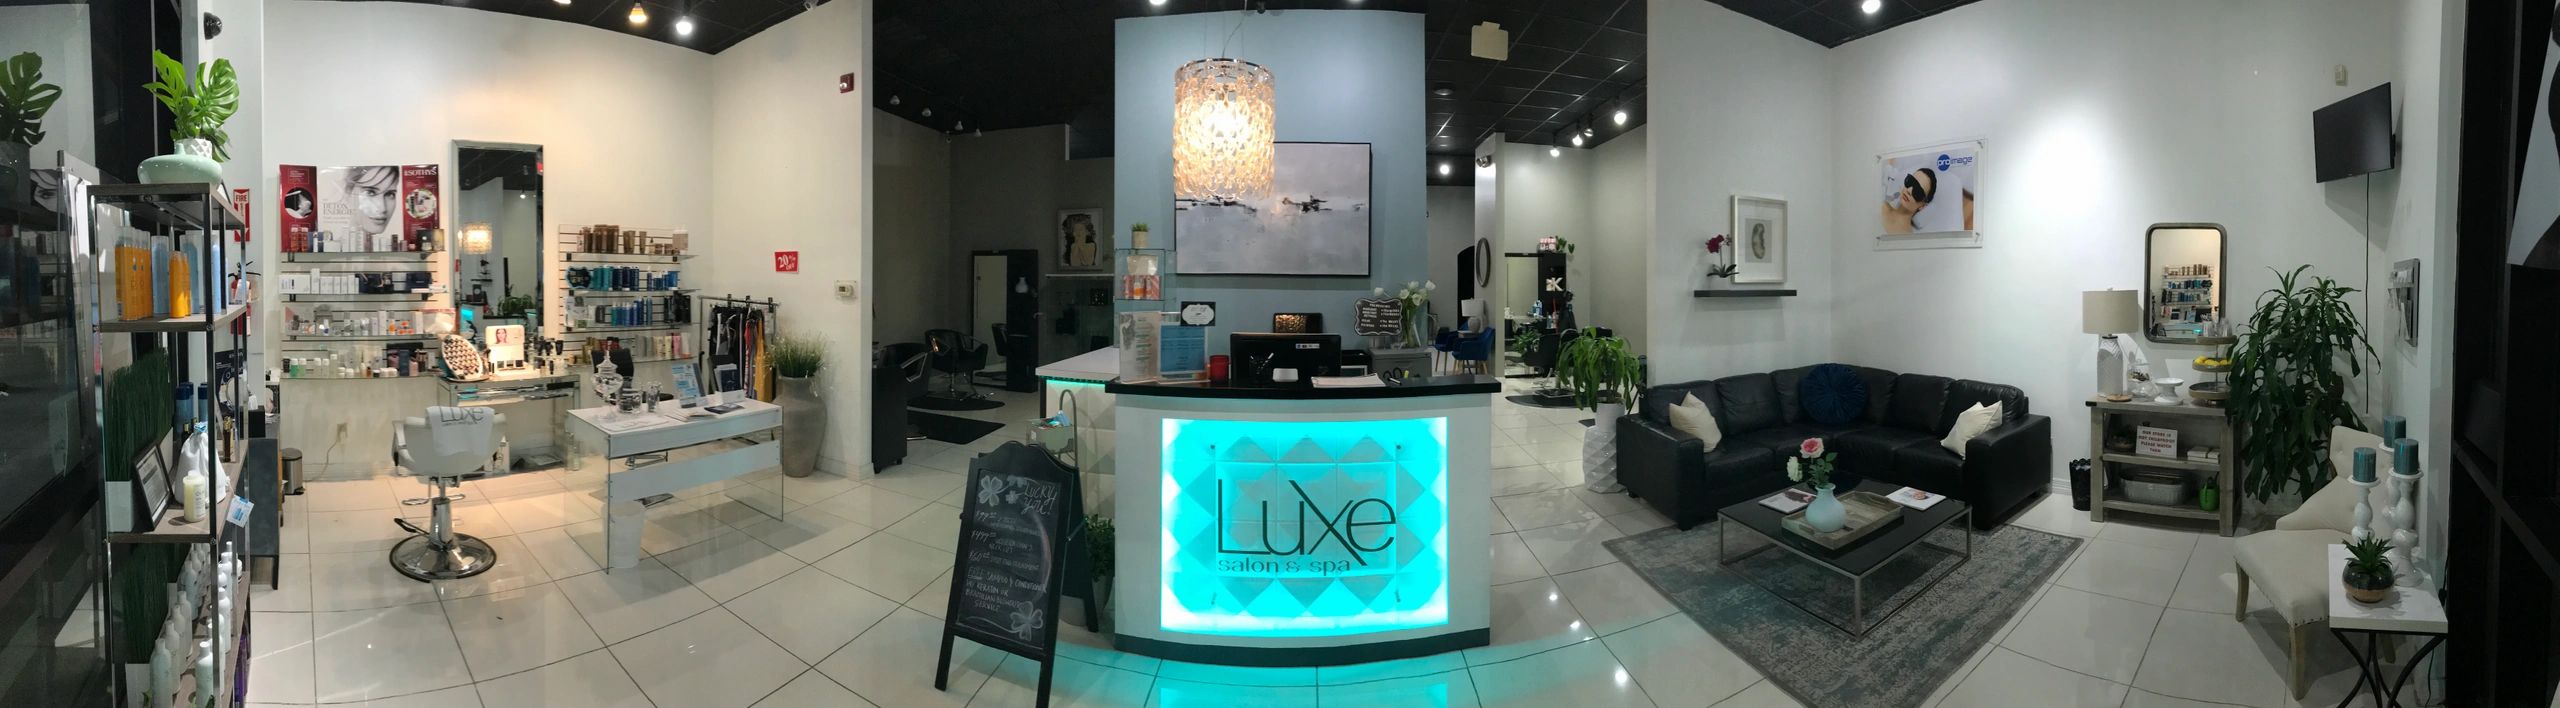 Luxe Salon & Spa Pearland - Hair Salon, Spa, Hair Color